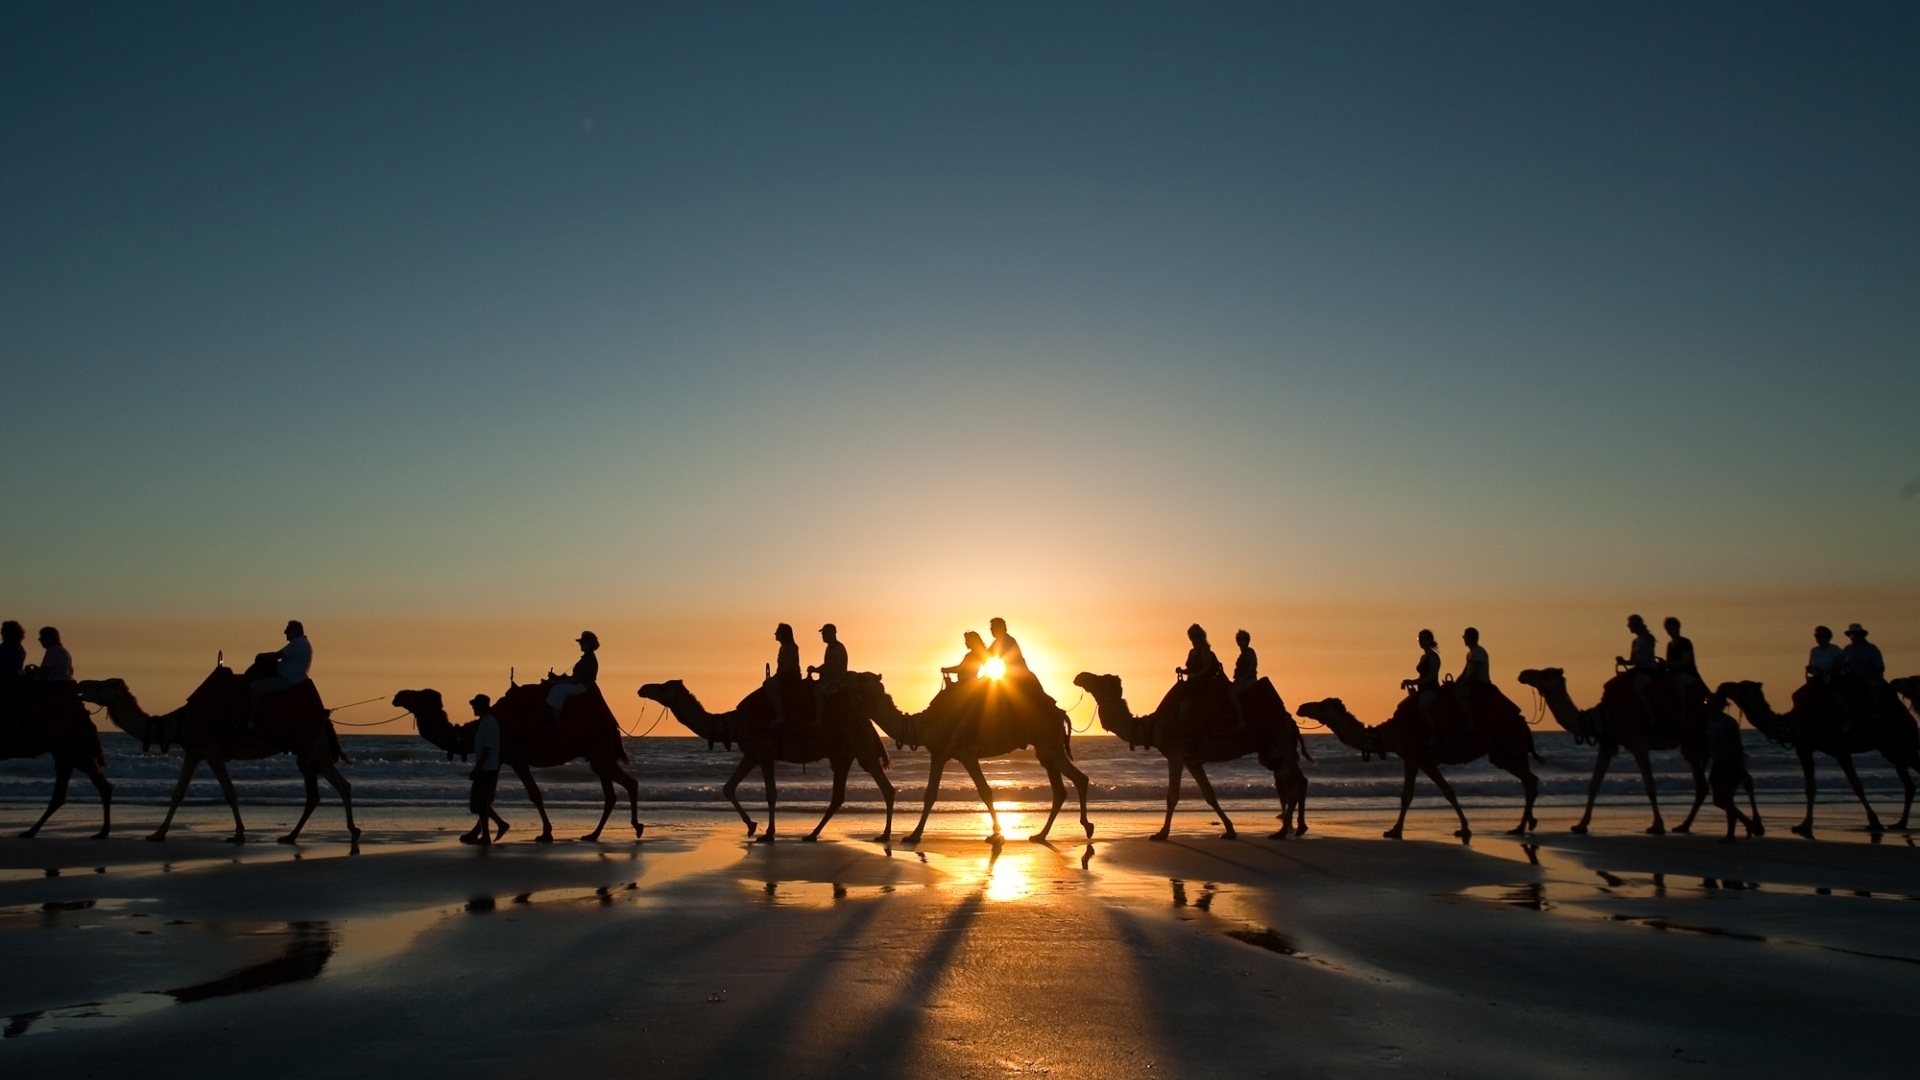 1460594 descargar imagen fotografía, caravana, playa, caravana de camellos, camello, gente, silueta: fondos de pantalla y protectores de pantalla gratis